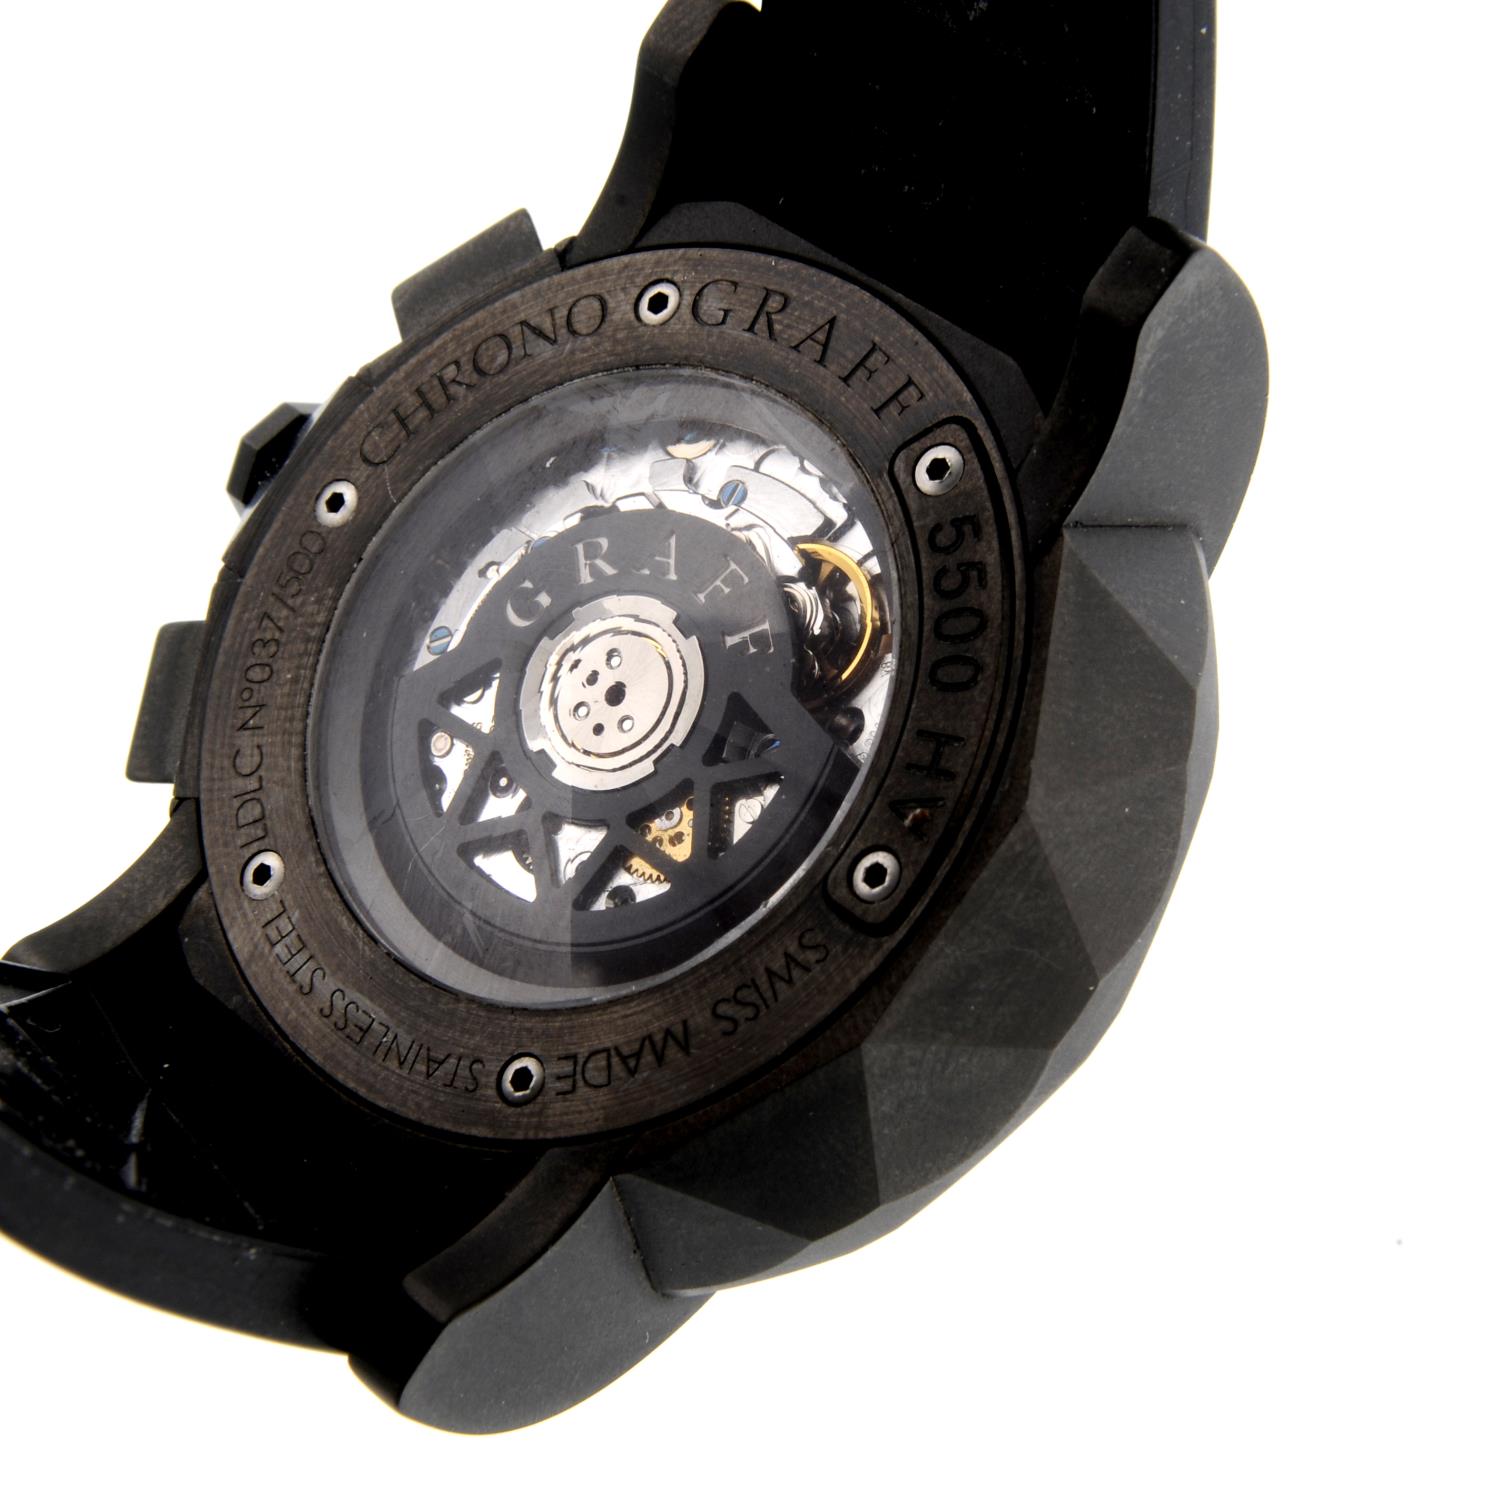 GRAFF - a limited edition gentleman's ChronoGraff chronograph wrist watch. - Image 5 of 5